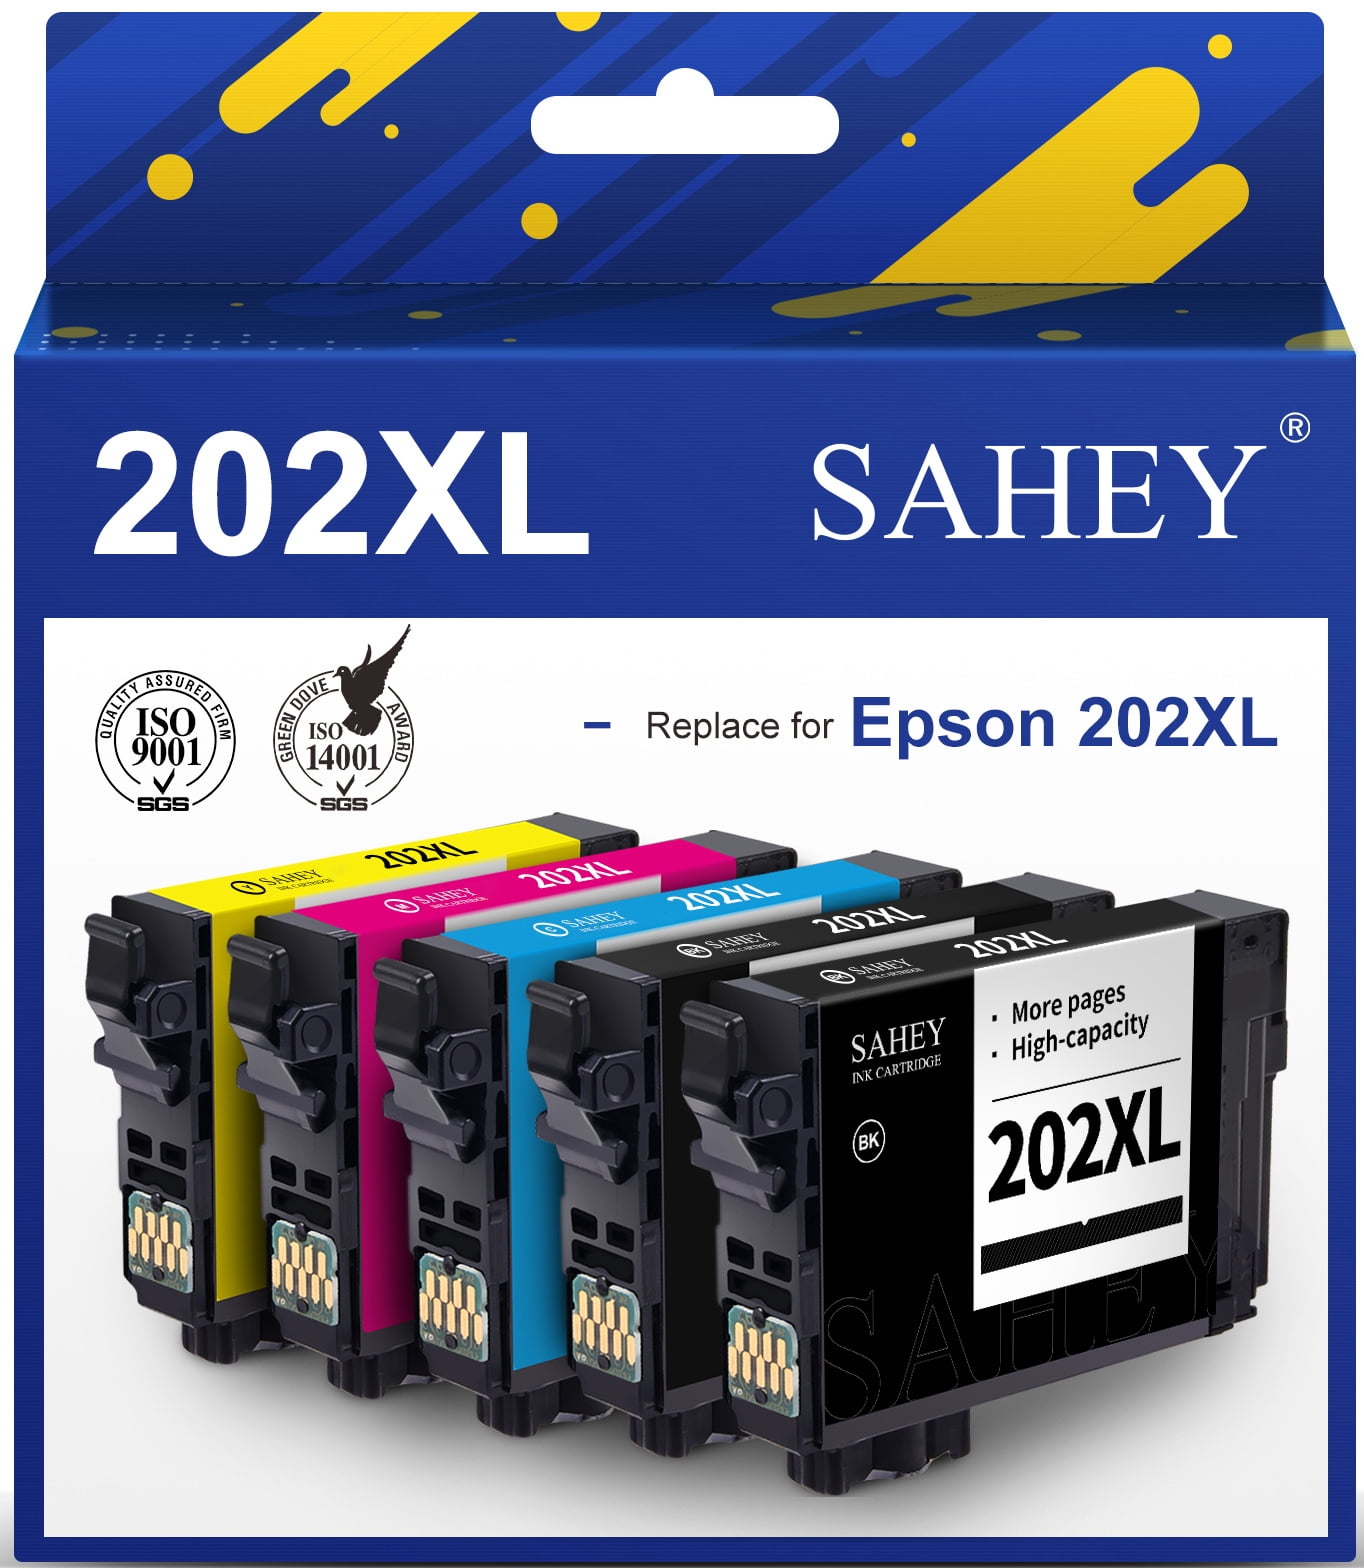 T502 Compatible Ink Cartridge for EPSON 502 T502 XL 502XL Expression  Premium XP5100 XP5105 Wrokforce wf-2865 wf-2860 - AliExpress